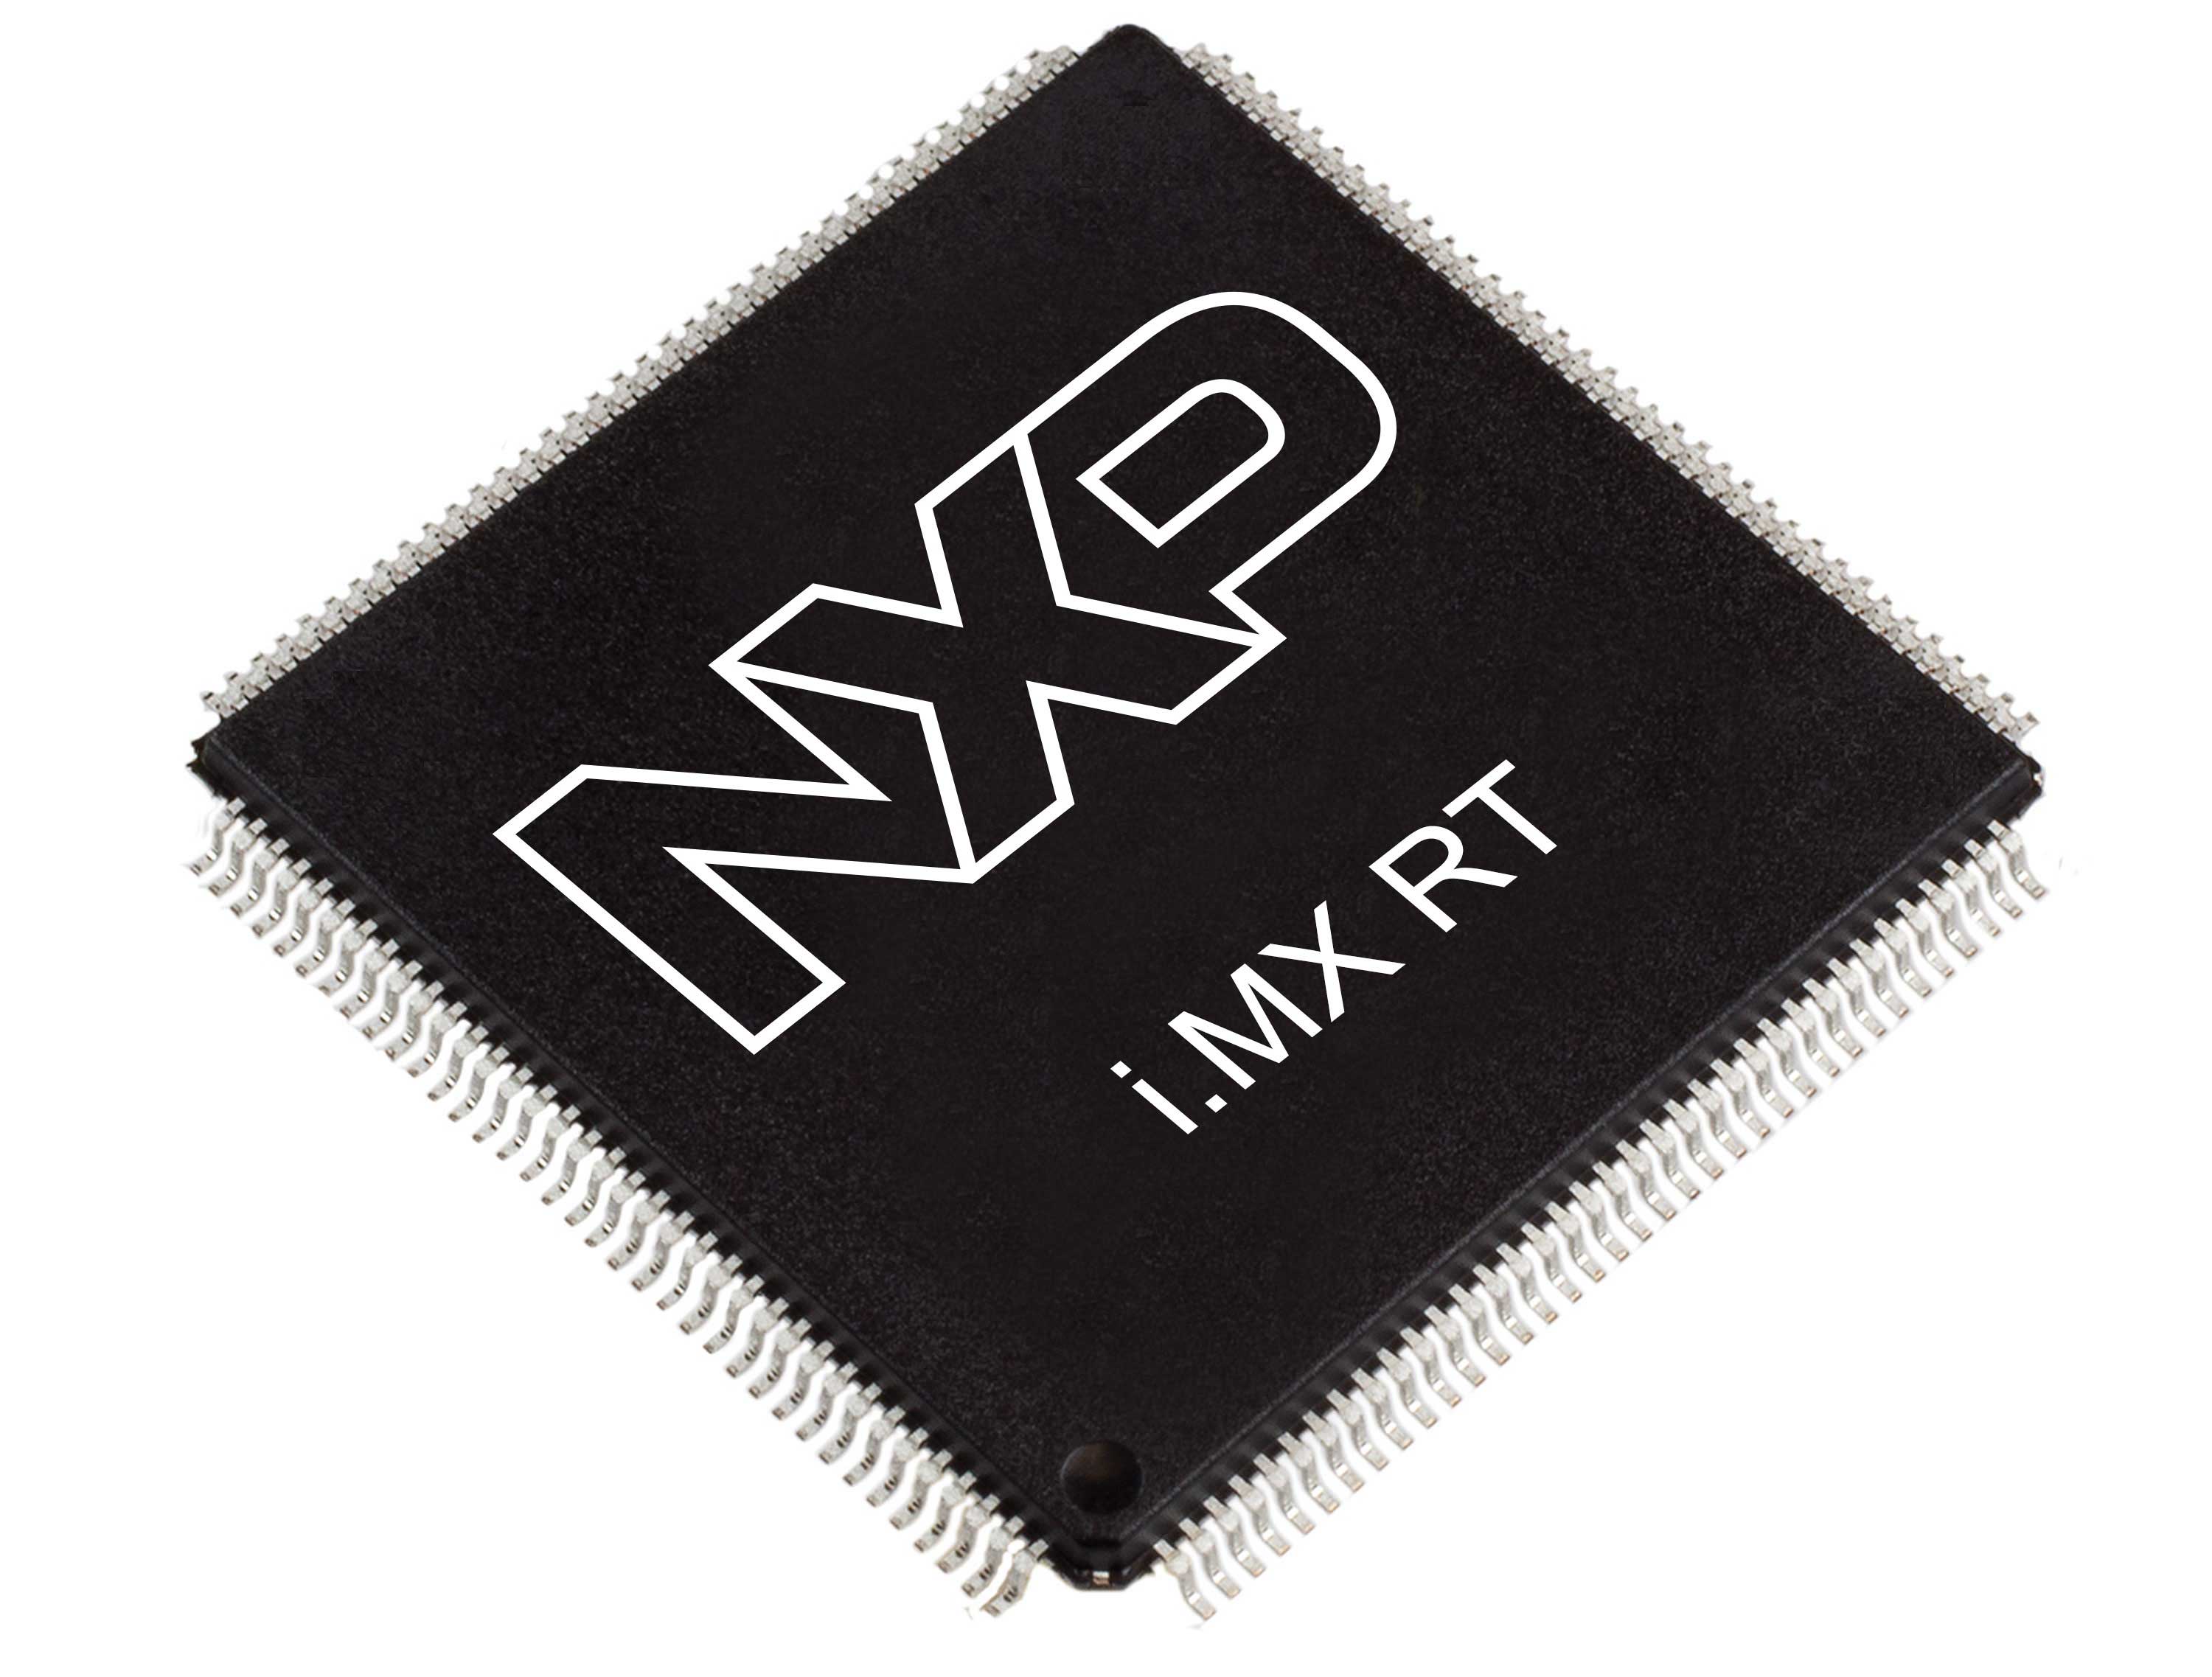 NXP_i.MXRT_ChipShot_Oct202017.jpg